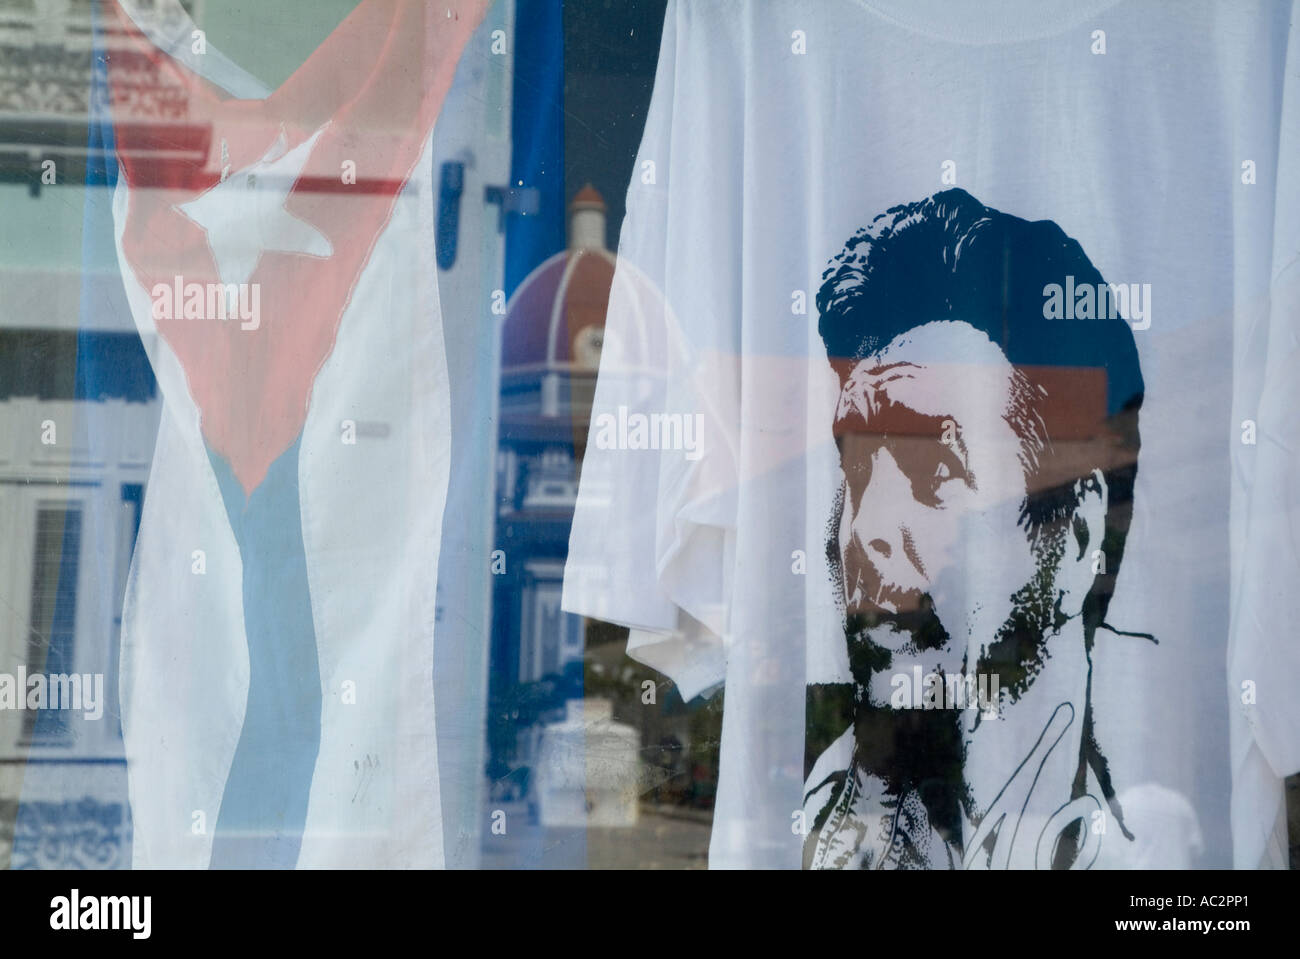 Che Guevara T-shirt and Cuban flag in a store window, Cienfuegos, Cuba. Stock Photo